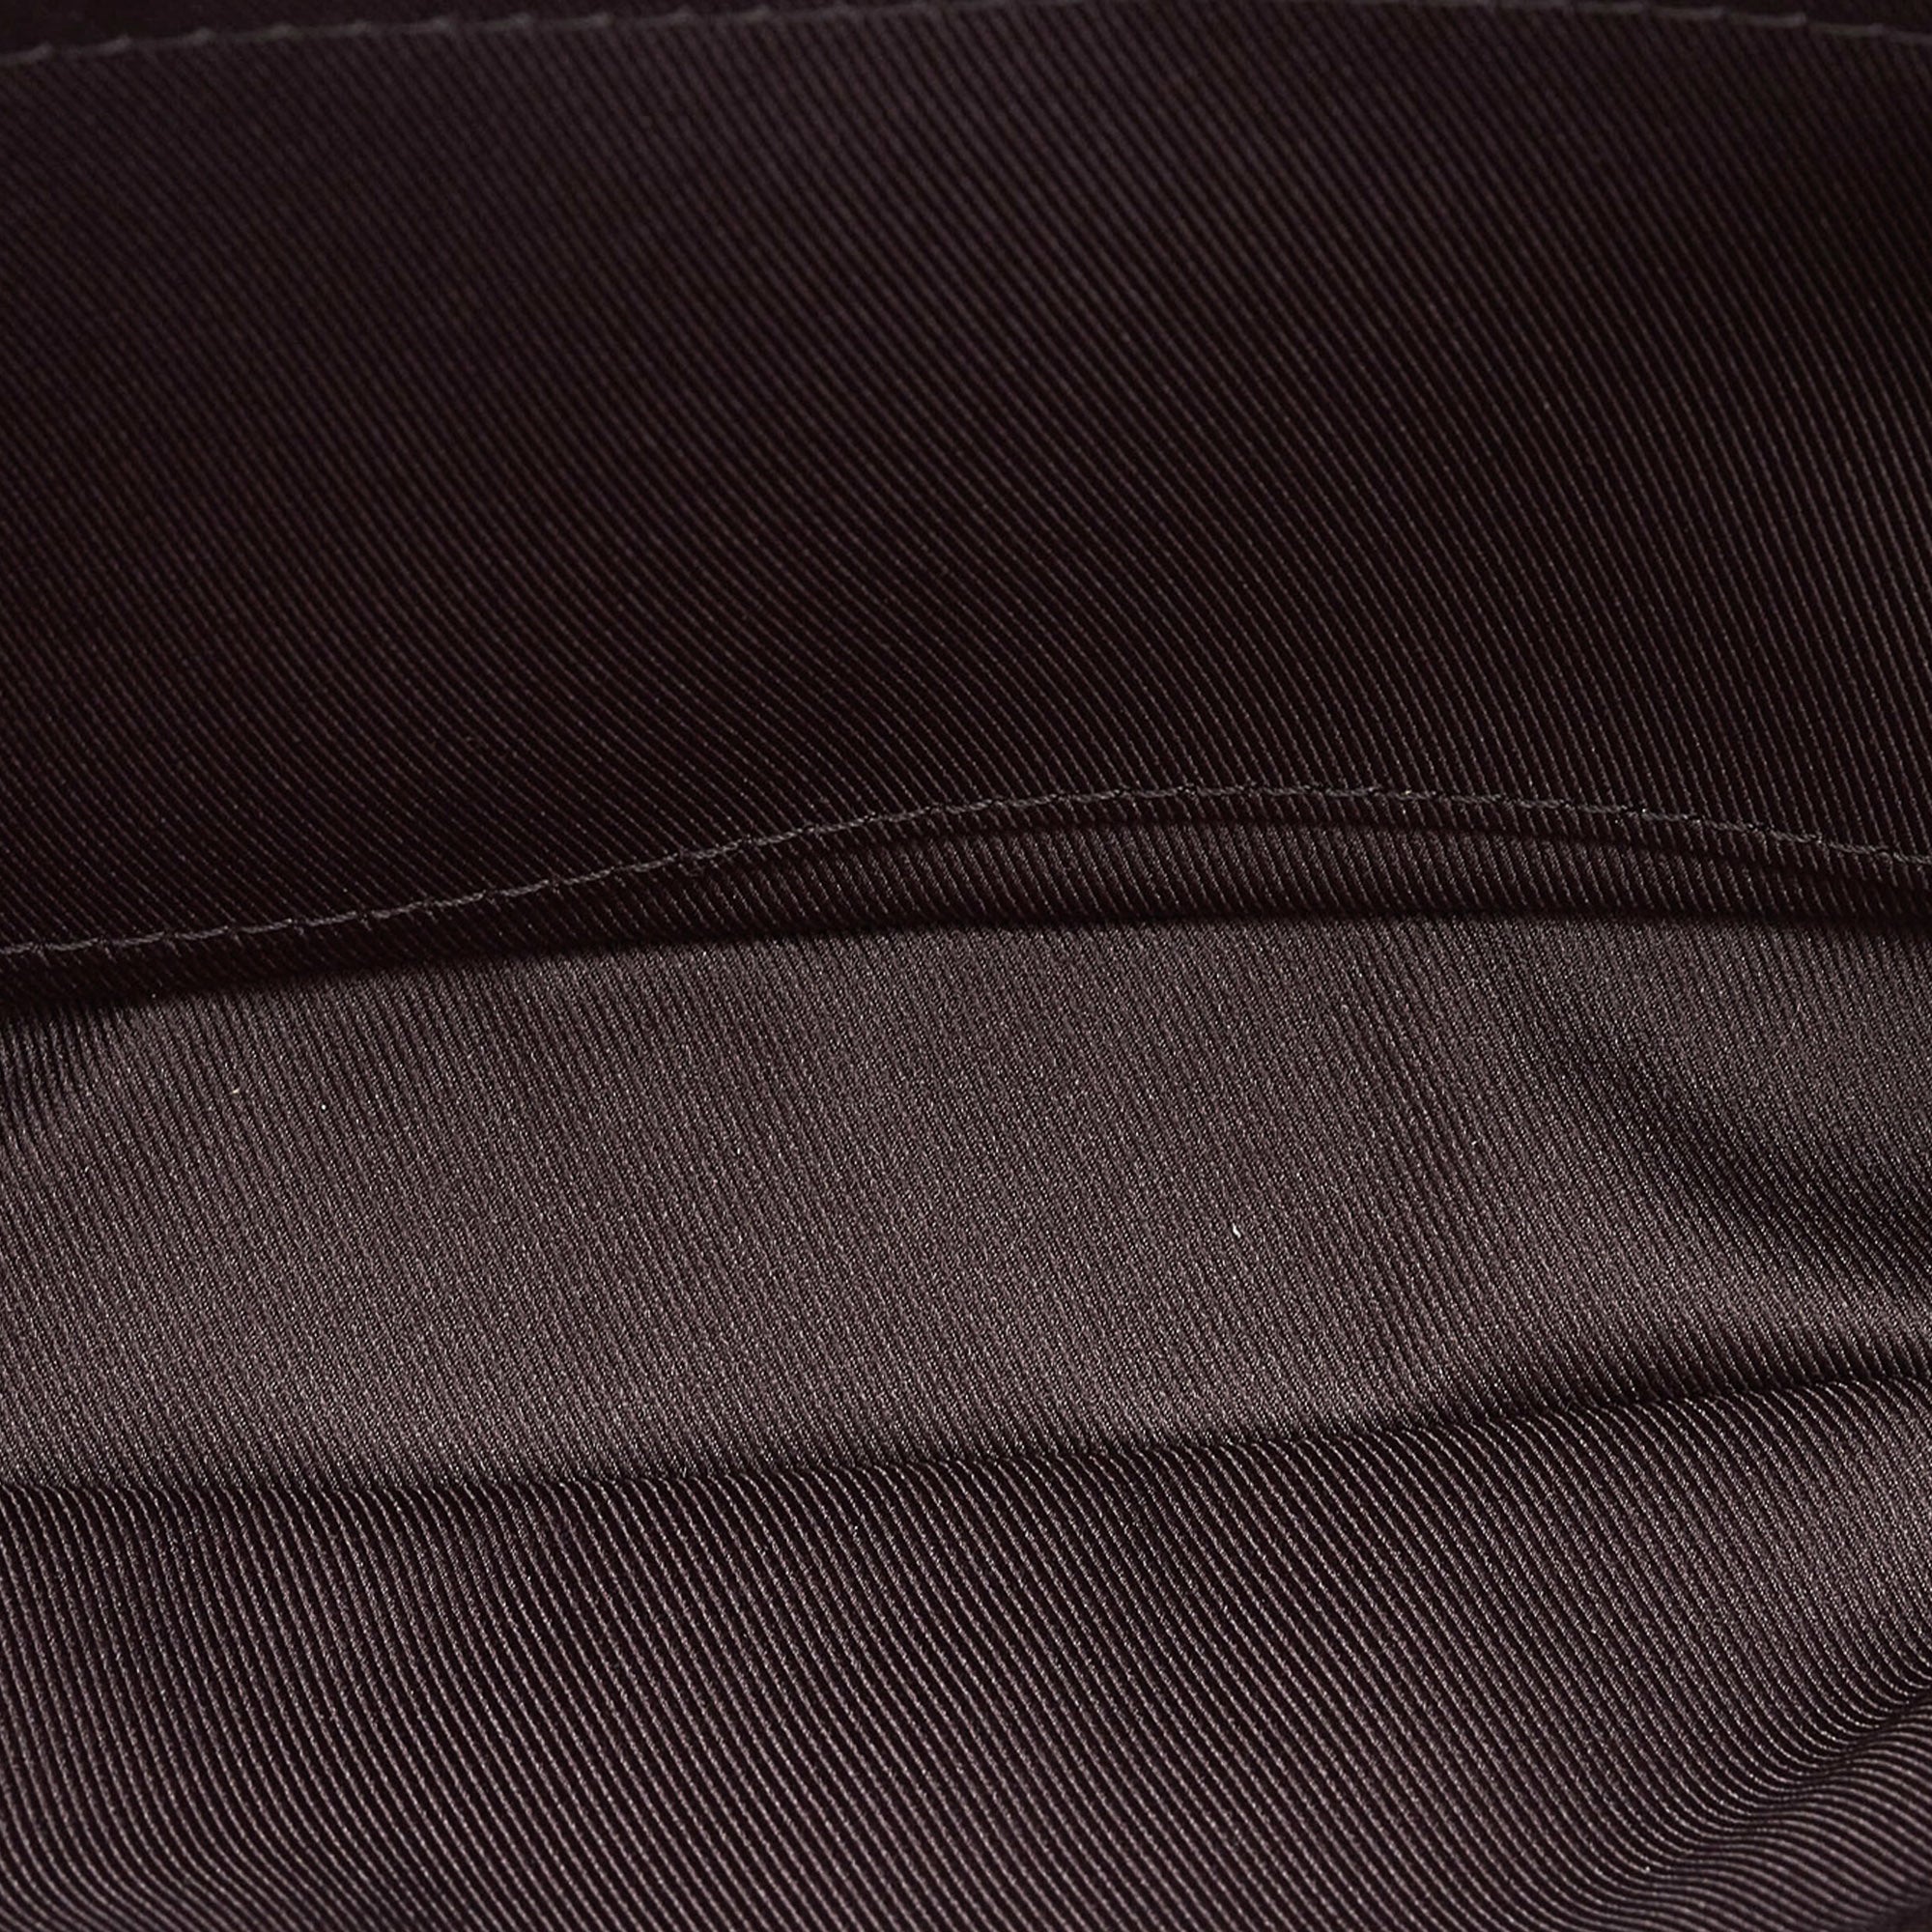 Louis Vuitton Brown Monogram Utility Front Bag Black Leather Cloth